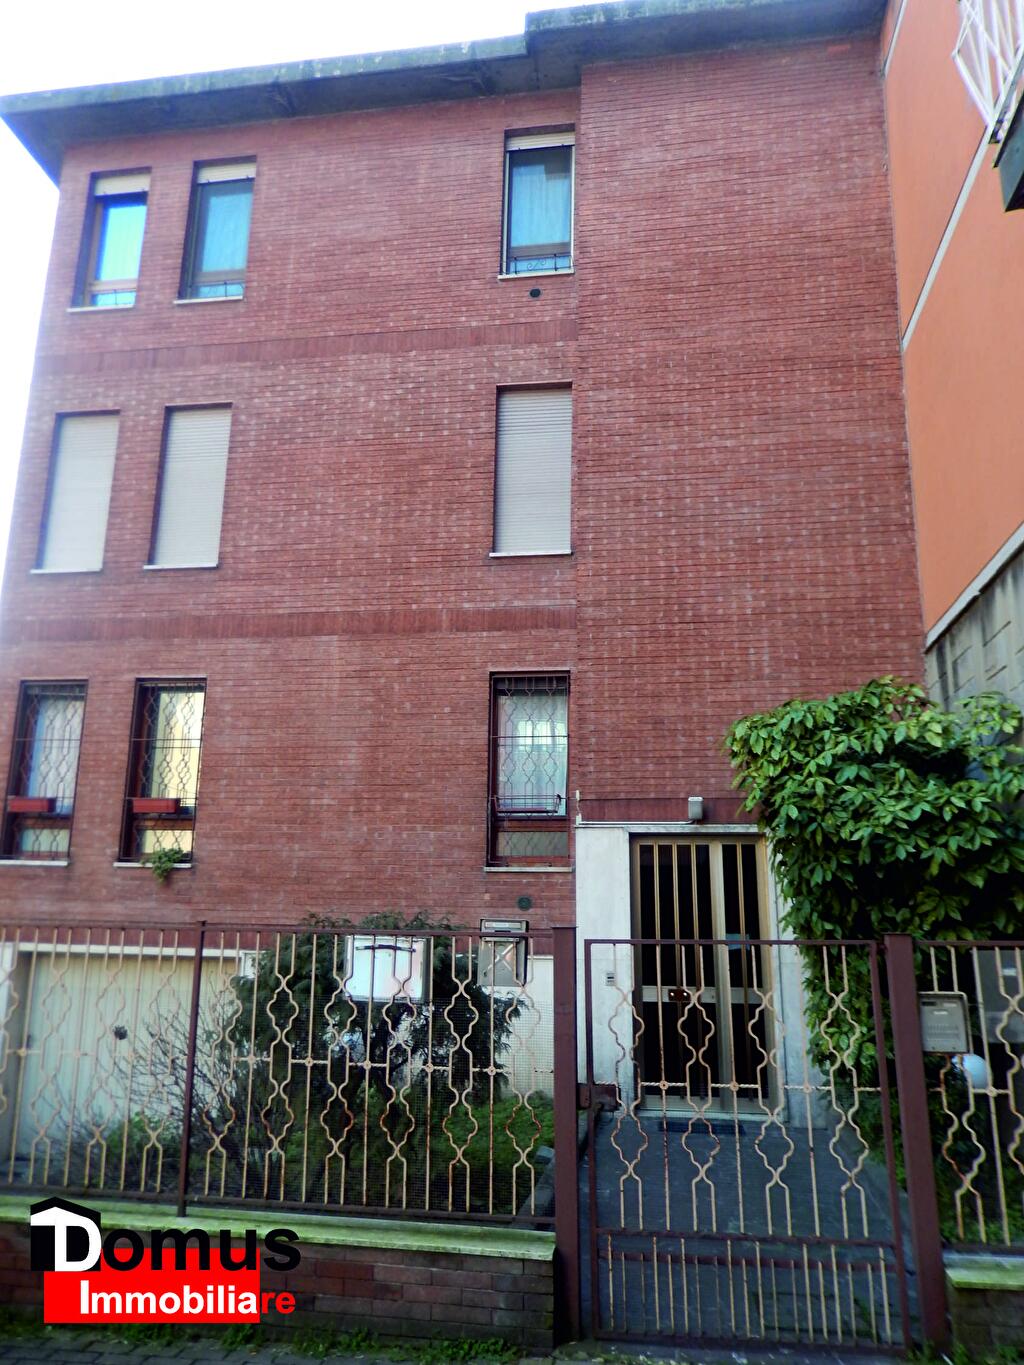 Immagine 1 di Appartamento in affitto  in via mac alister 29 a Ferrara